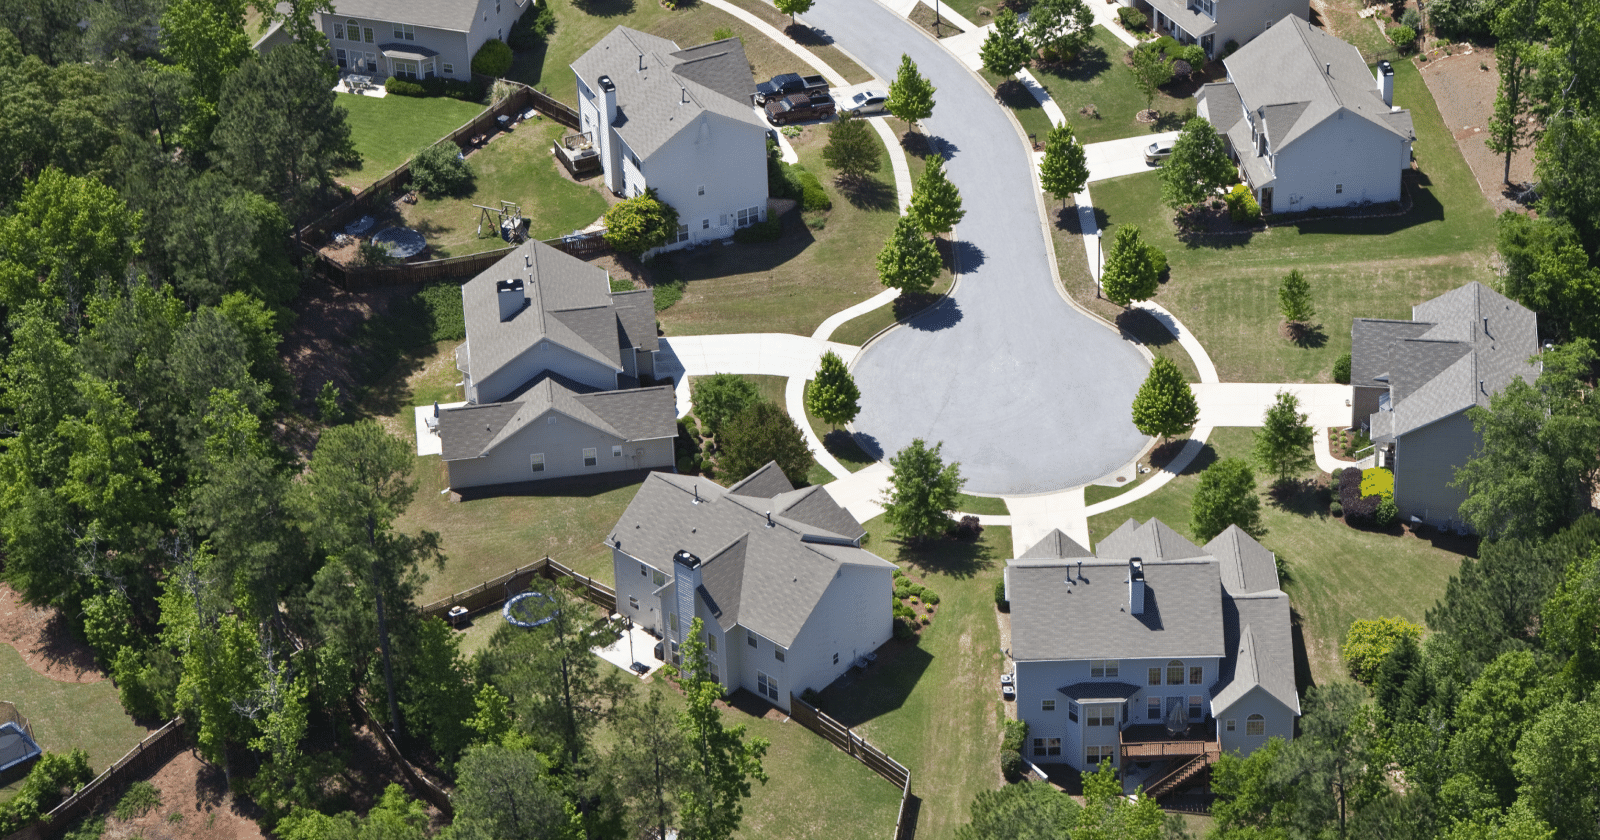 High Level View of a Suburban Neighborhood